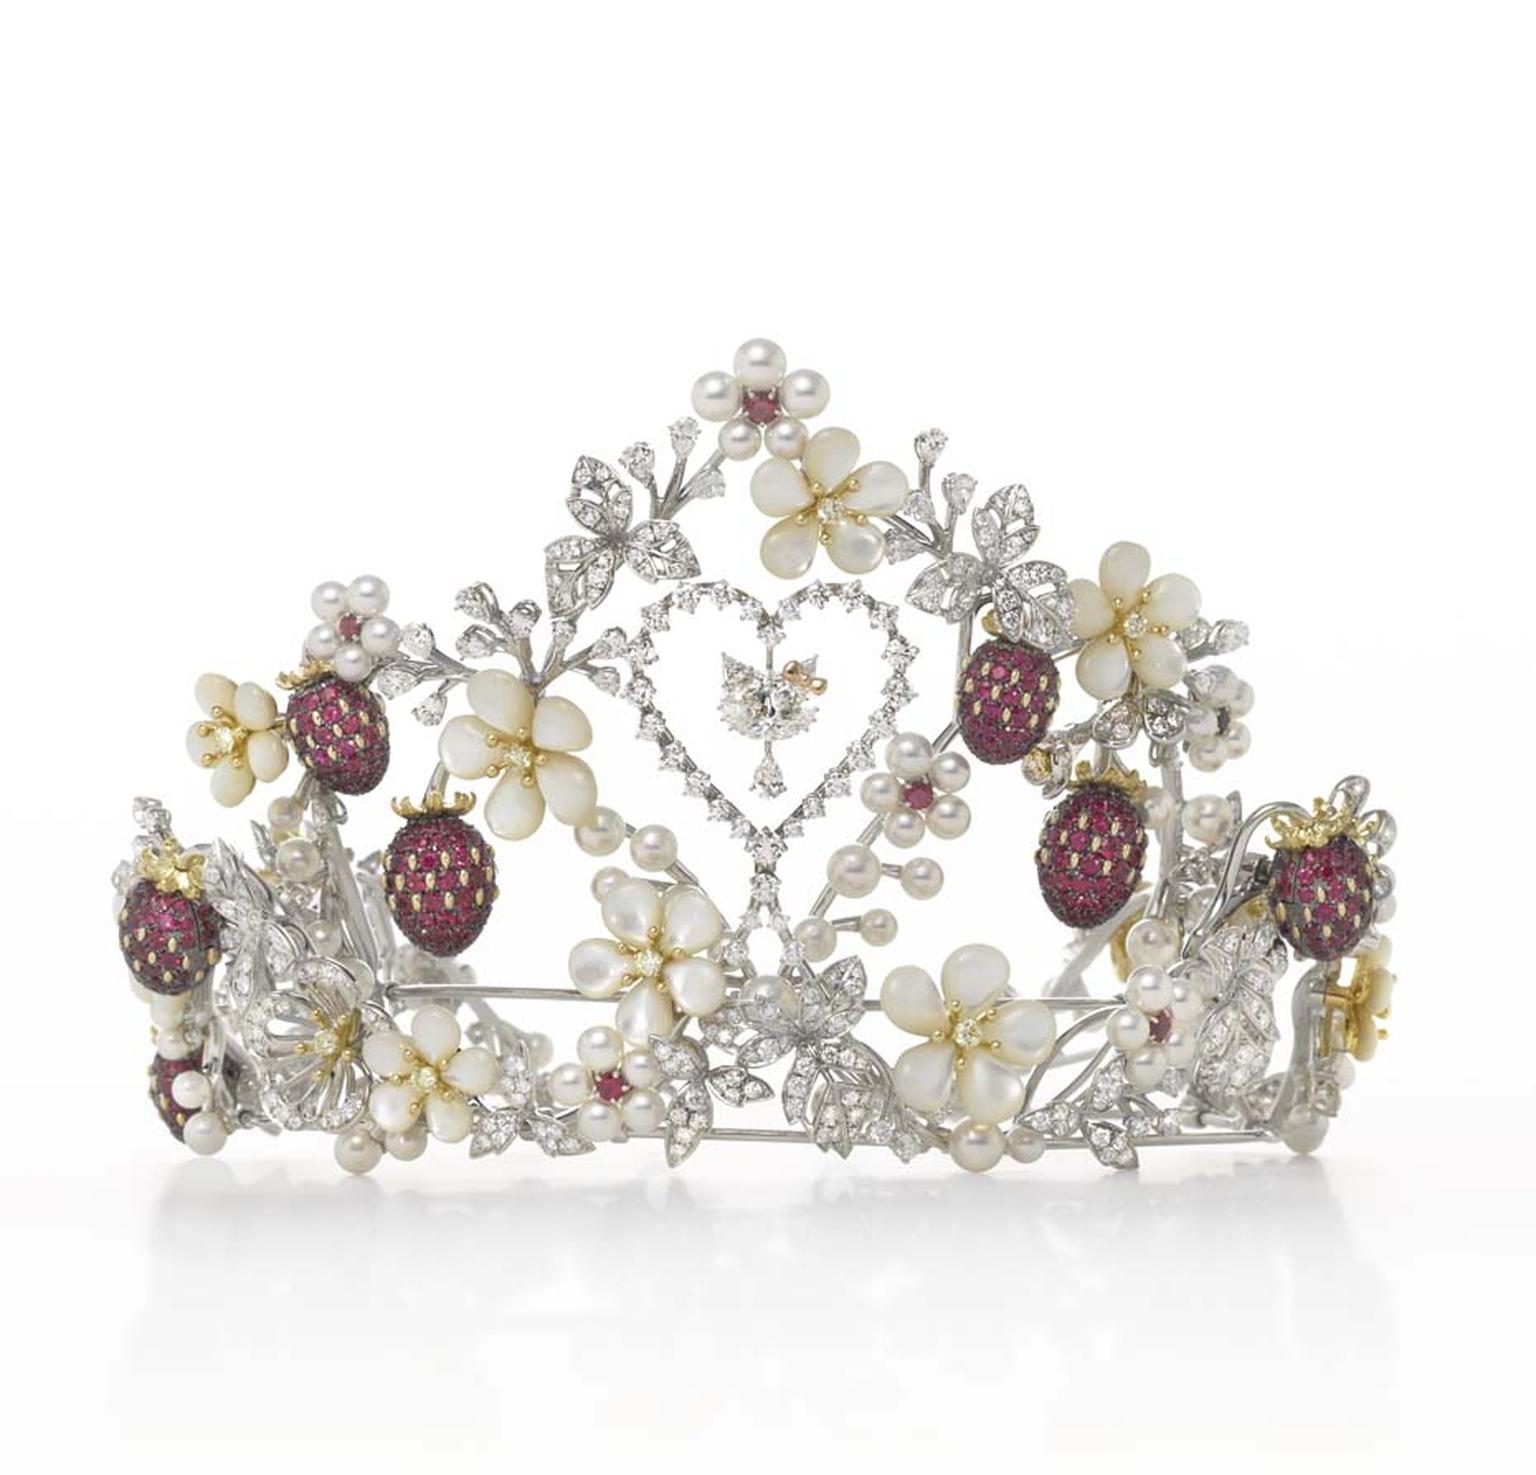 The Mikimoto x Hello Kitty tiara displays a three-dimensional depth that is unusual for a tiara